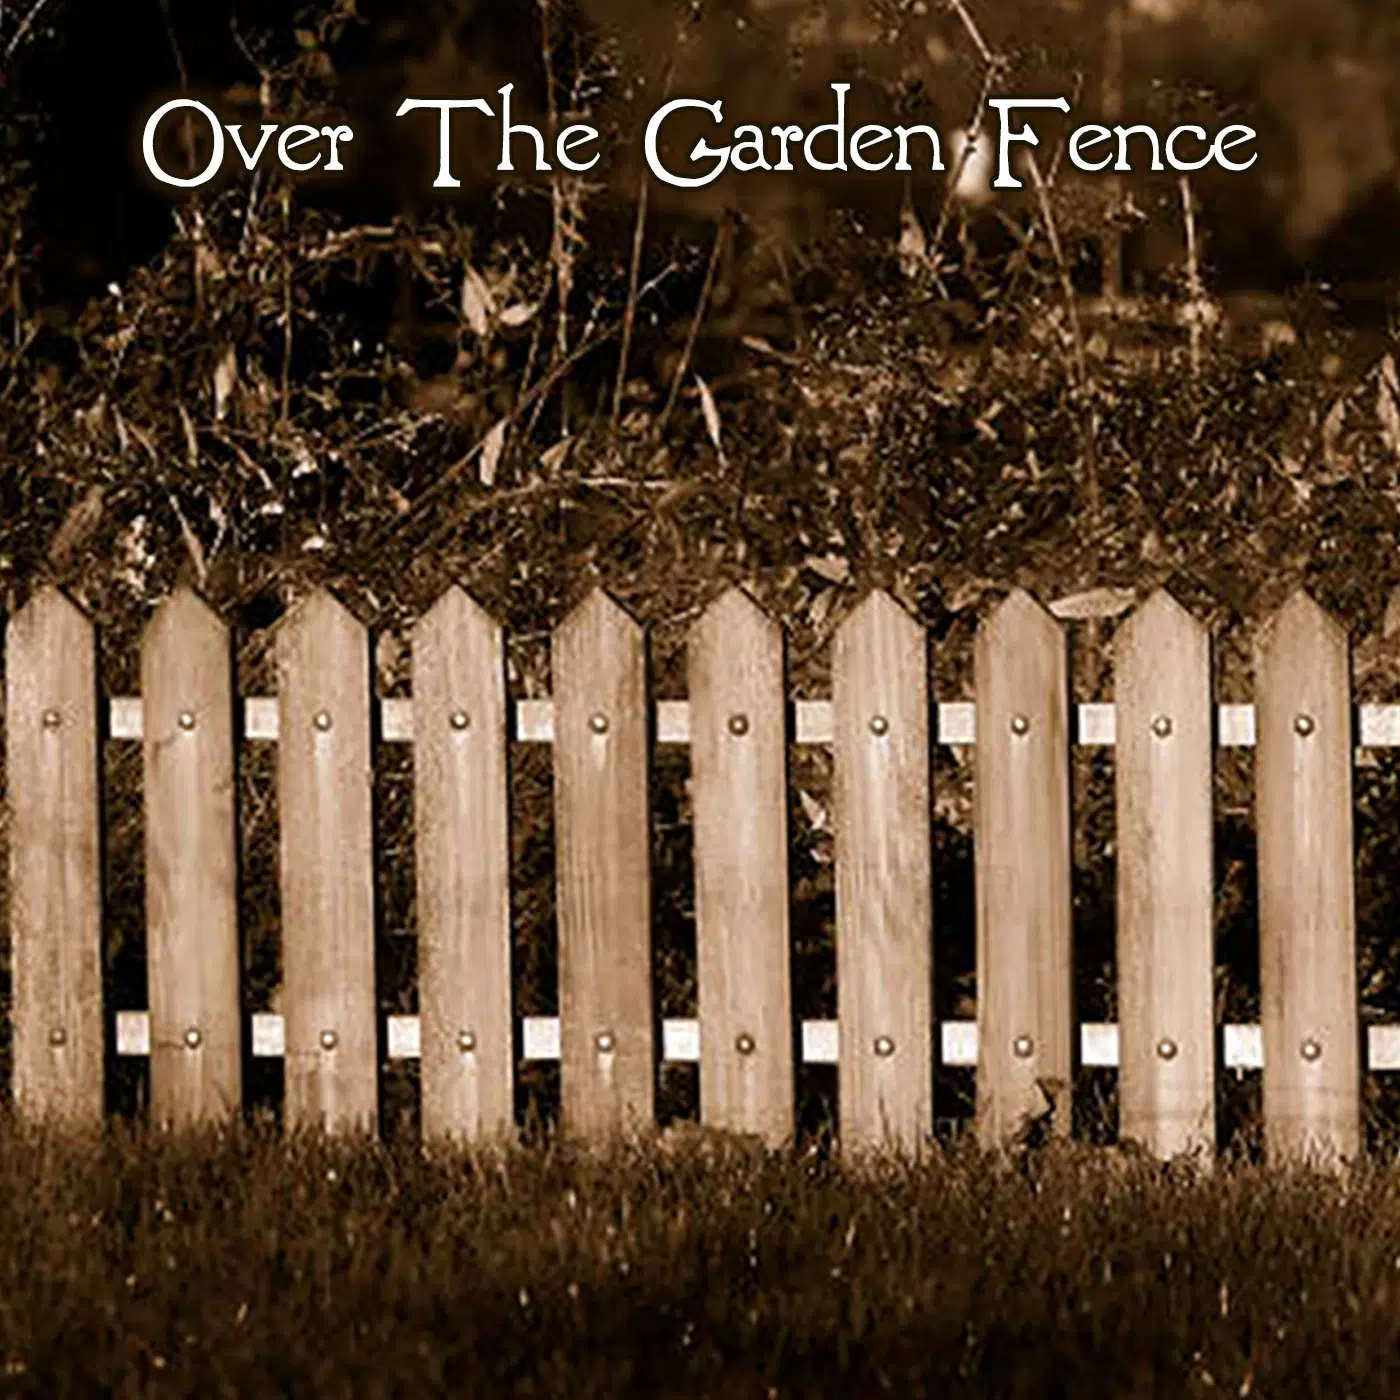 Over the Garden Fence